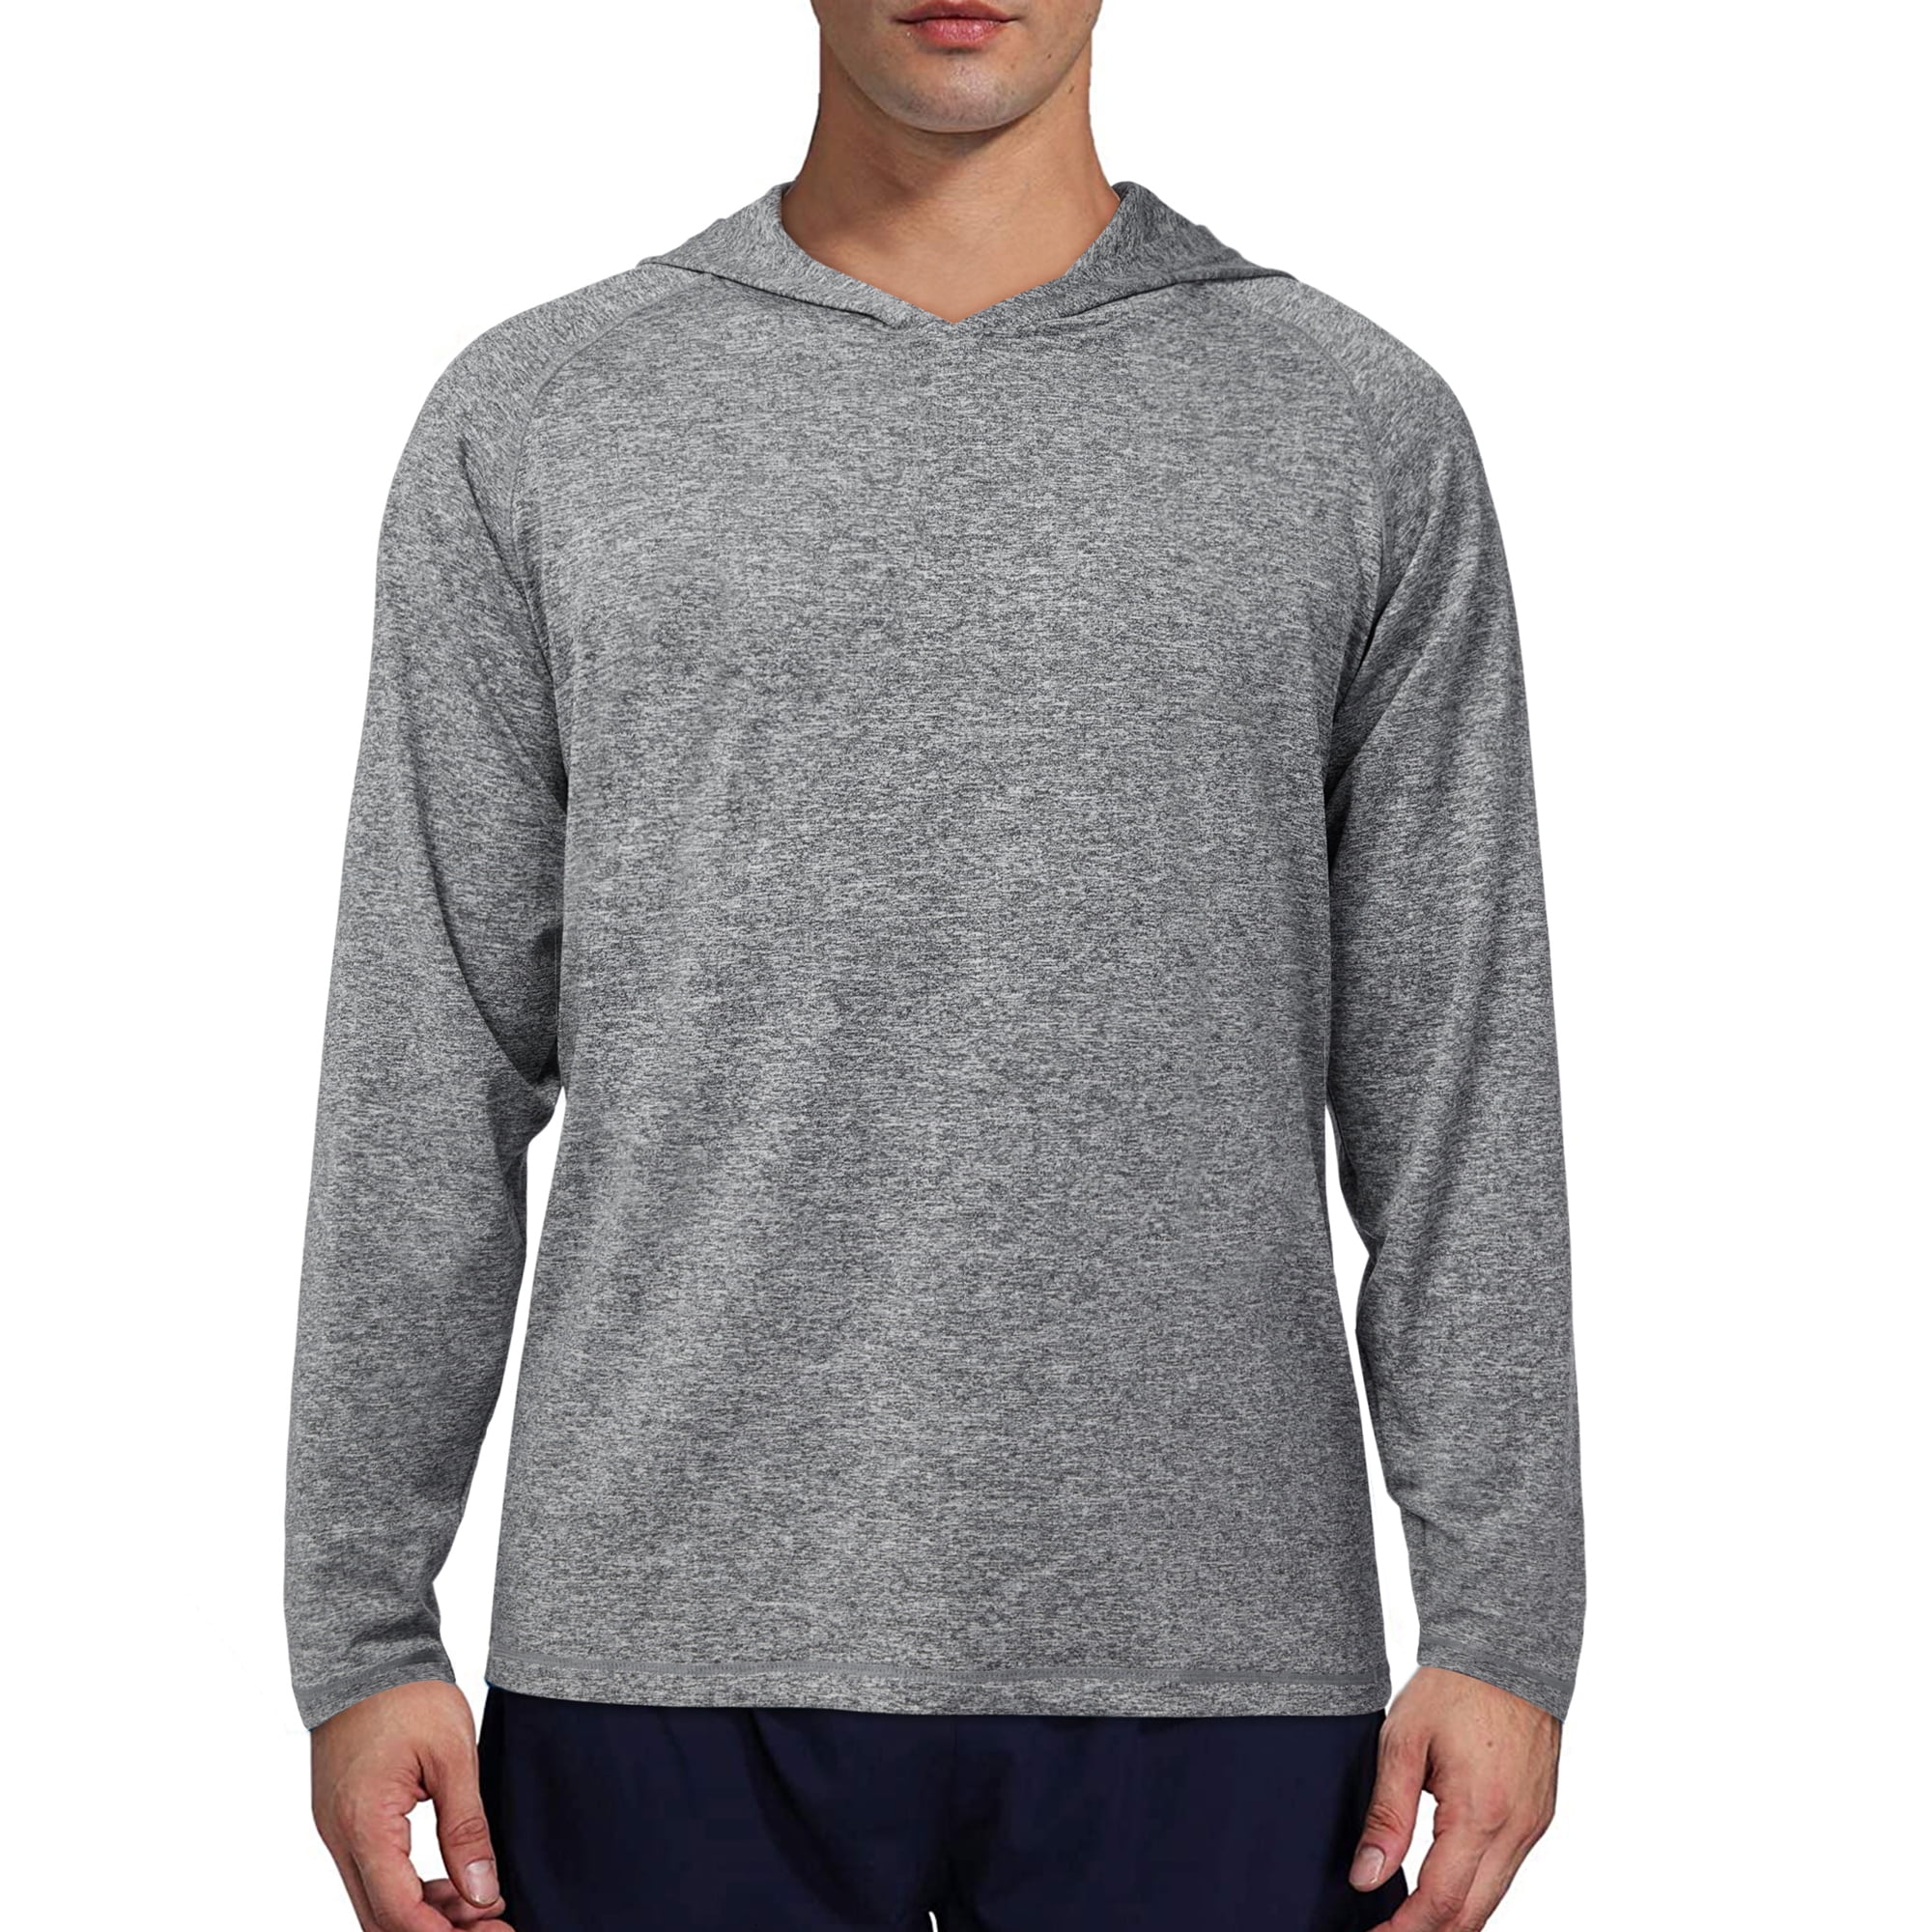 Men's Sun Protection Hoodie Outdoor Long Sleeve Sweatshirts for Running,  Fishing, Hiking, Gray, 3XL